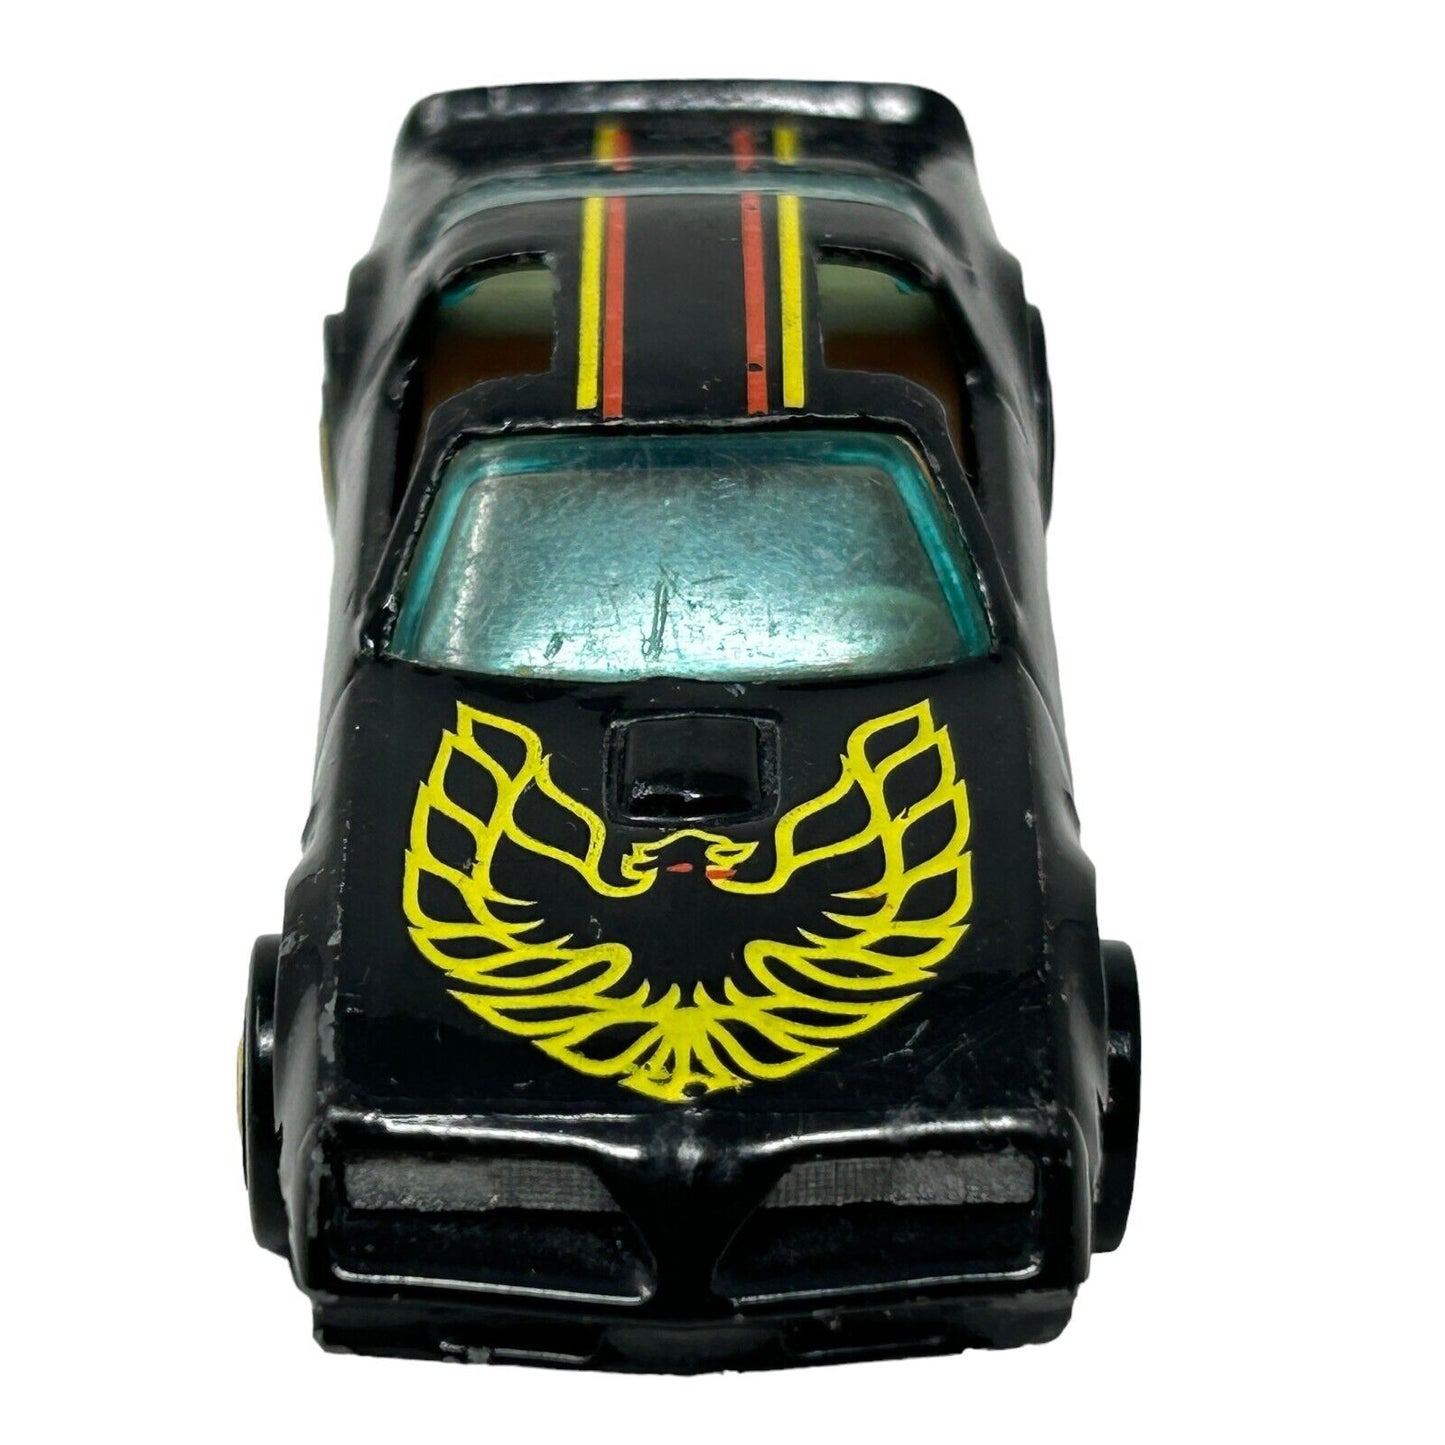 Pontiac Firebird Trans Am Hot Bird Hot Wheels Diecast Car Vintage 80s Black GHO